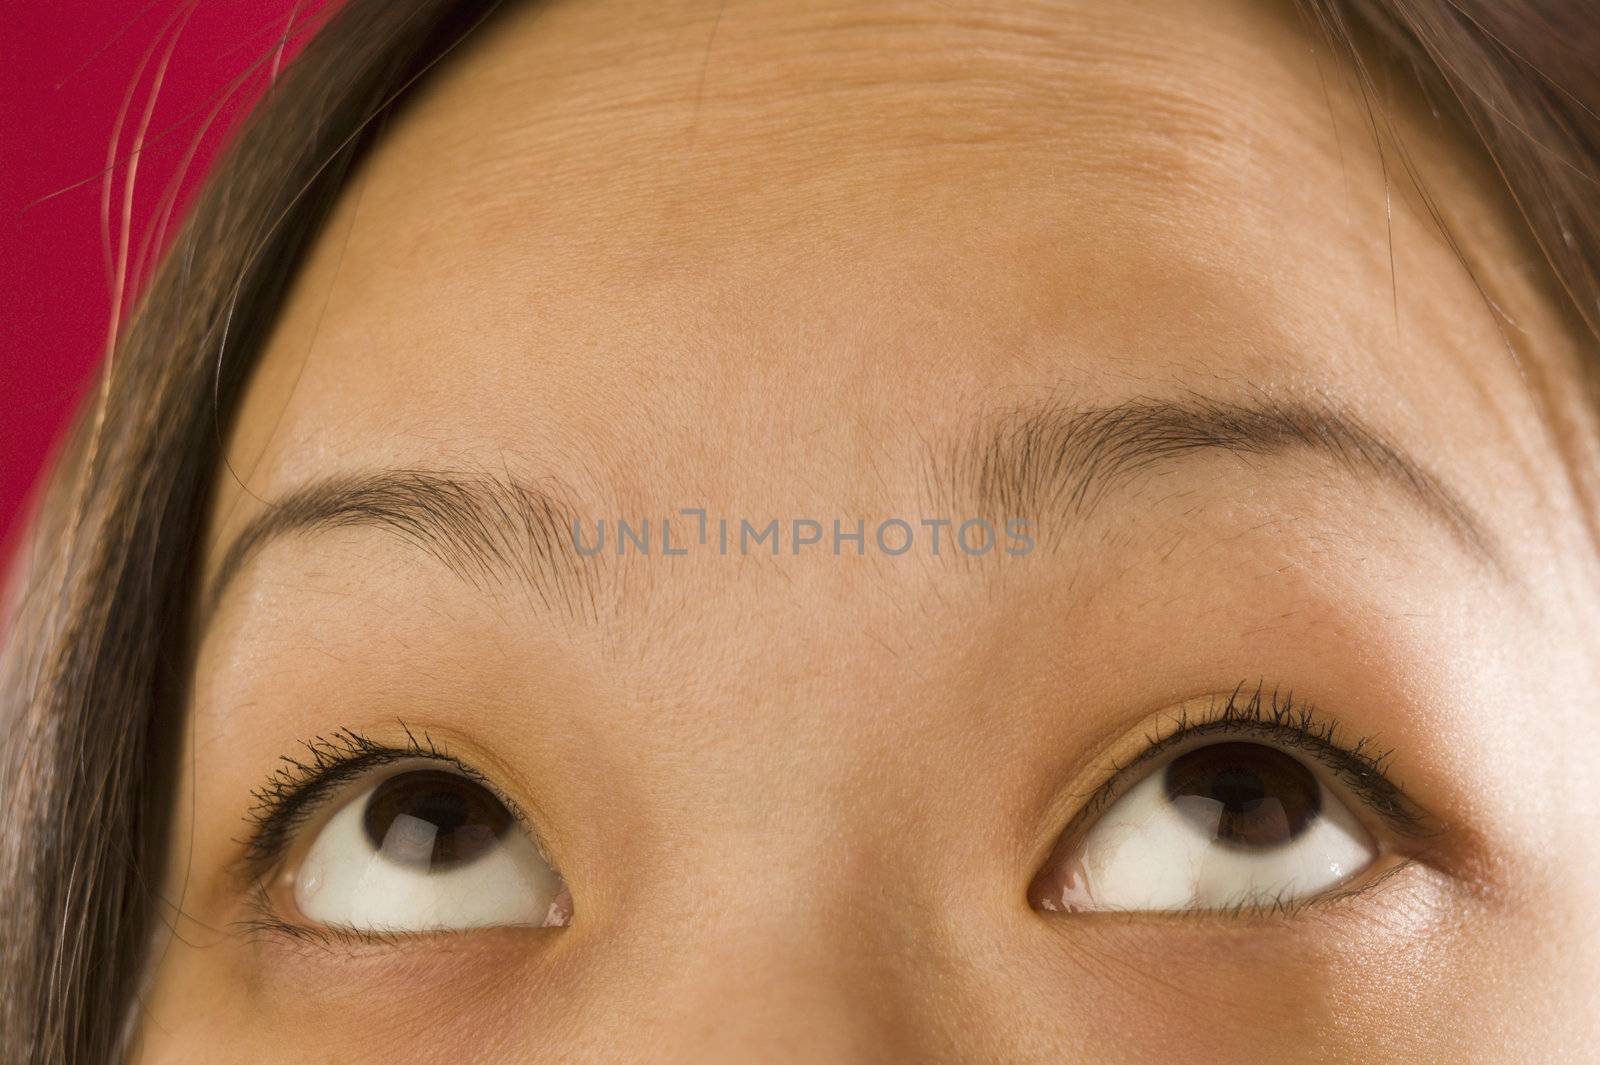 Asian woman's eyes looking up by edbockstock